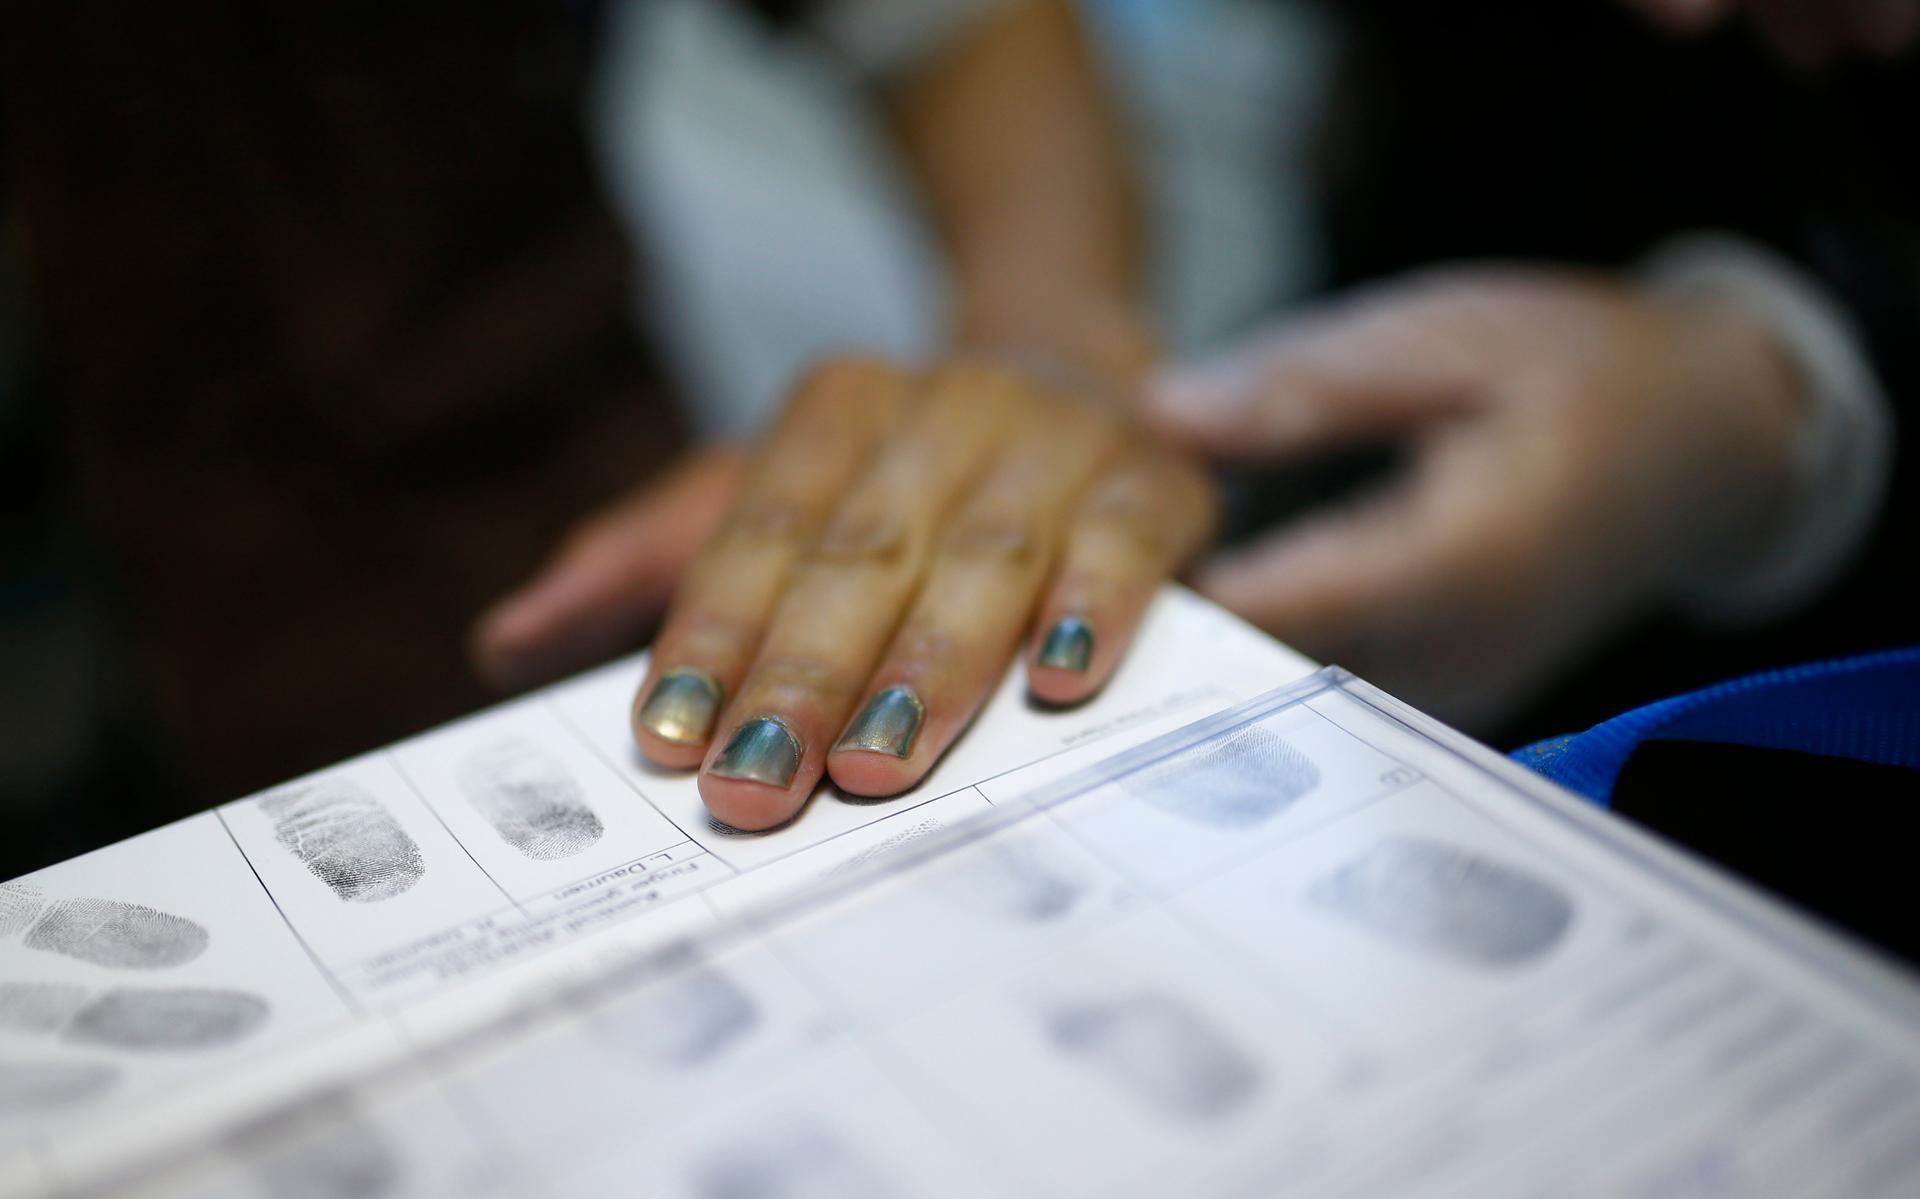 Fingerprints of a migrant are taken during registration at the Patrick-Henry Village refugee center, a former U.S. military facility in Heidelberg, Germany September 29, 2015.